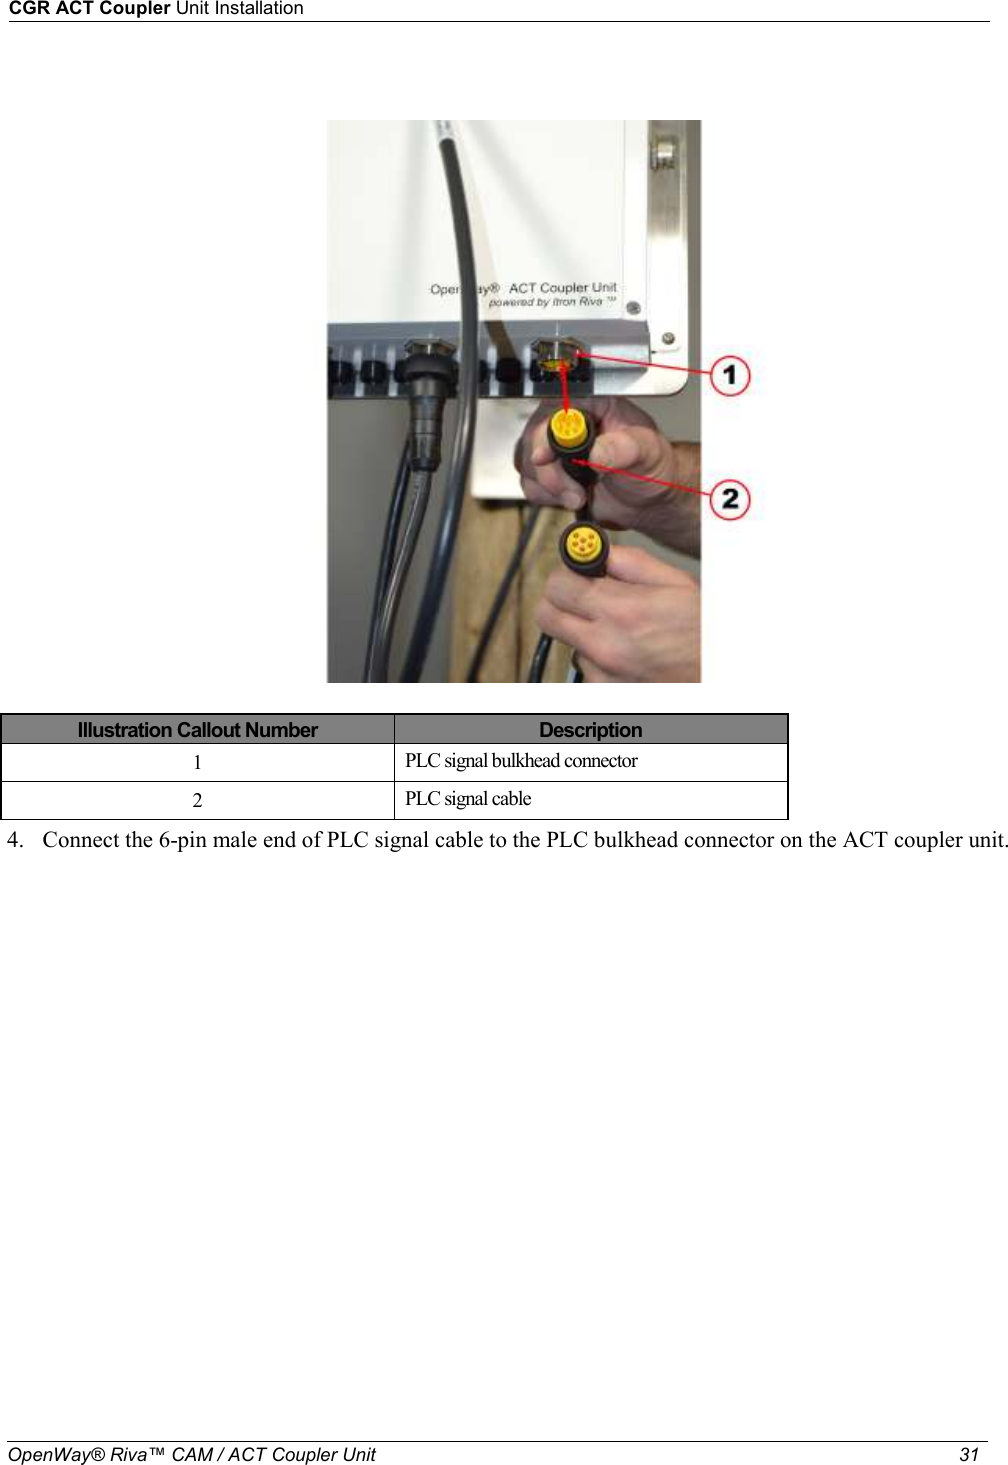 CGR ACT Coupler Unit Installation  OpenWay® Riva™ CAM / ACT Coupler Unit   31          Illustration Callout Number  Description 1   PLC signal bulkhead connector 2   PLC signal cable 4. Connect the 6-pin male end of PLC signal cable to the PLC bulkhead connector on the ACT coupler unit. 